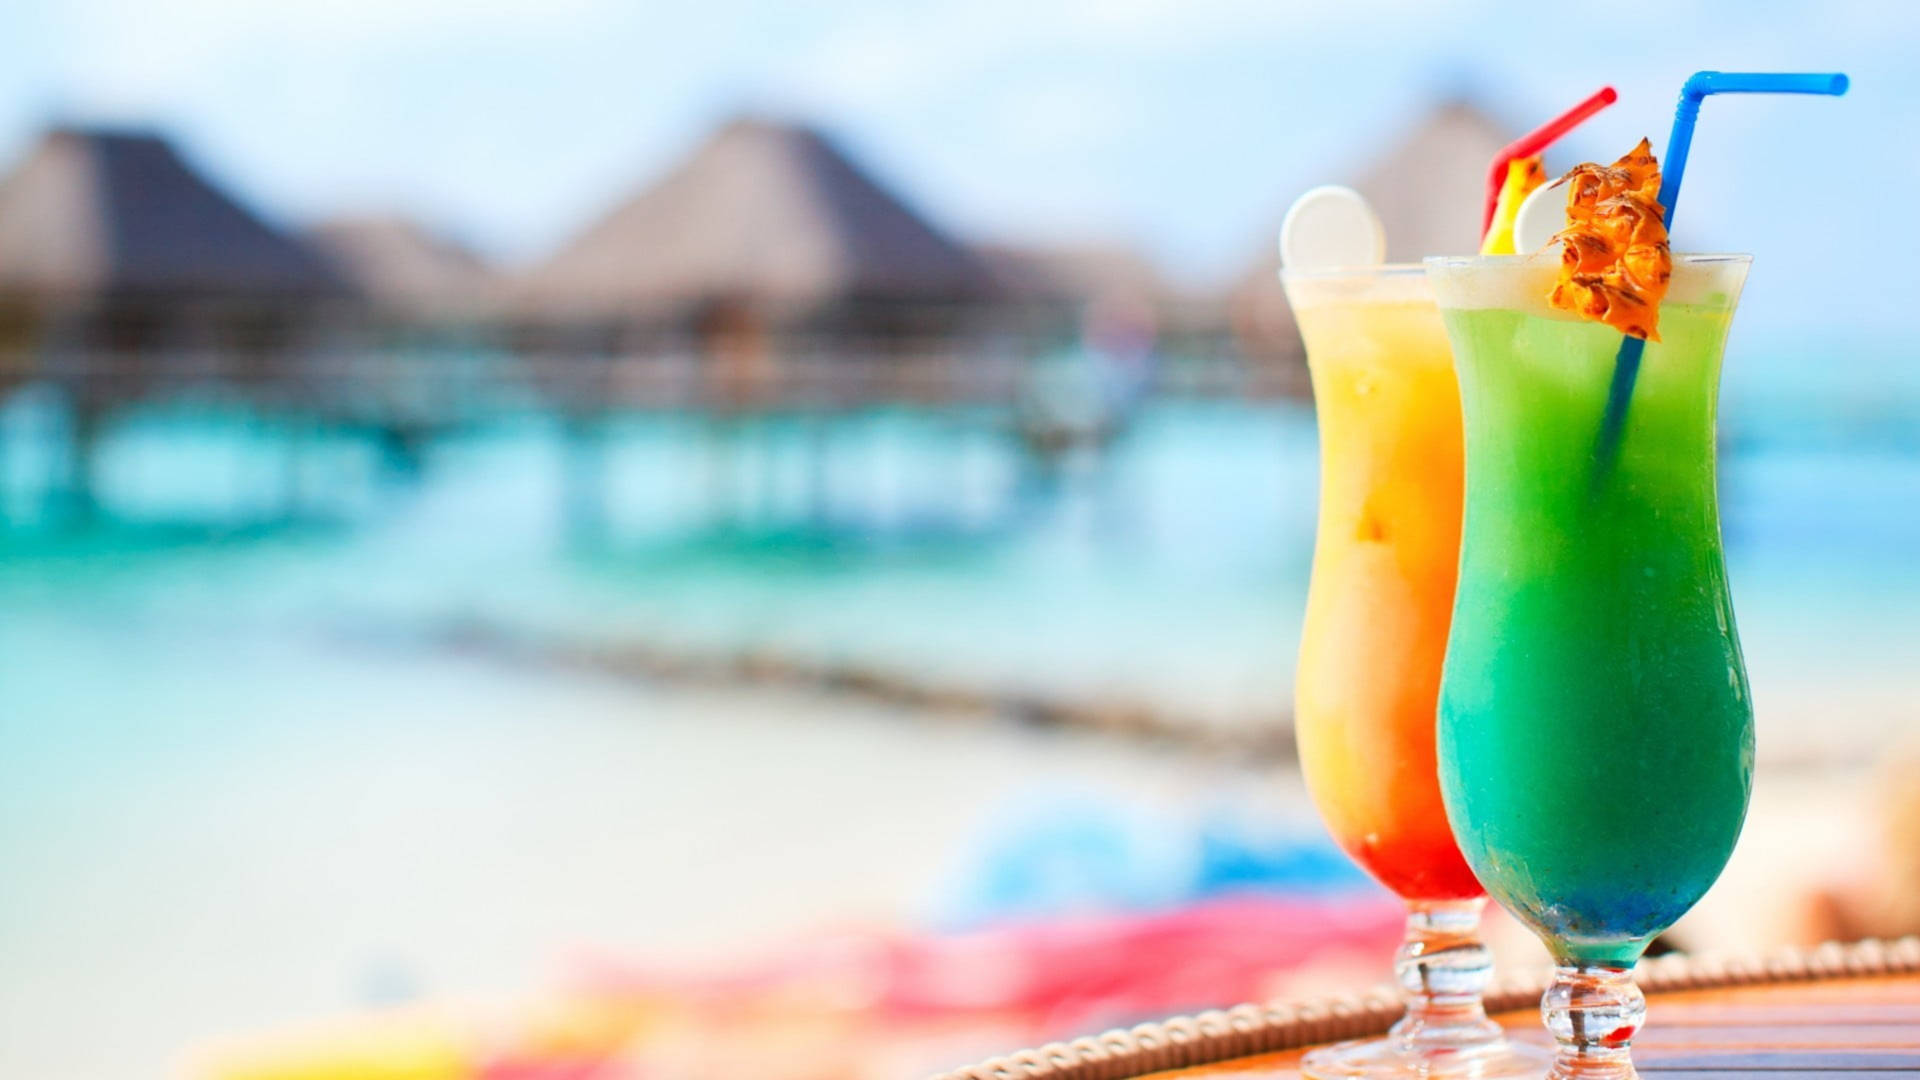 Fondode Pantalla Con Un Blue Curacao Y Un Tequila Sunrise, Bebida Tropical. Fondo de pantalla